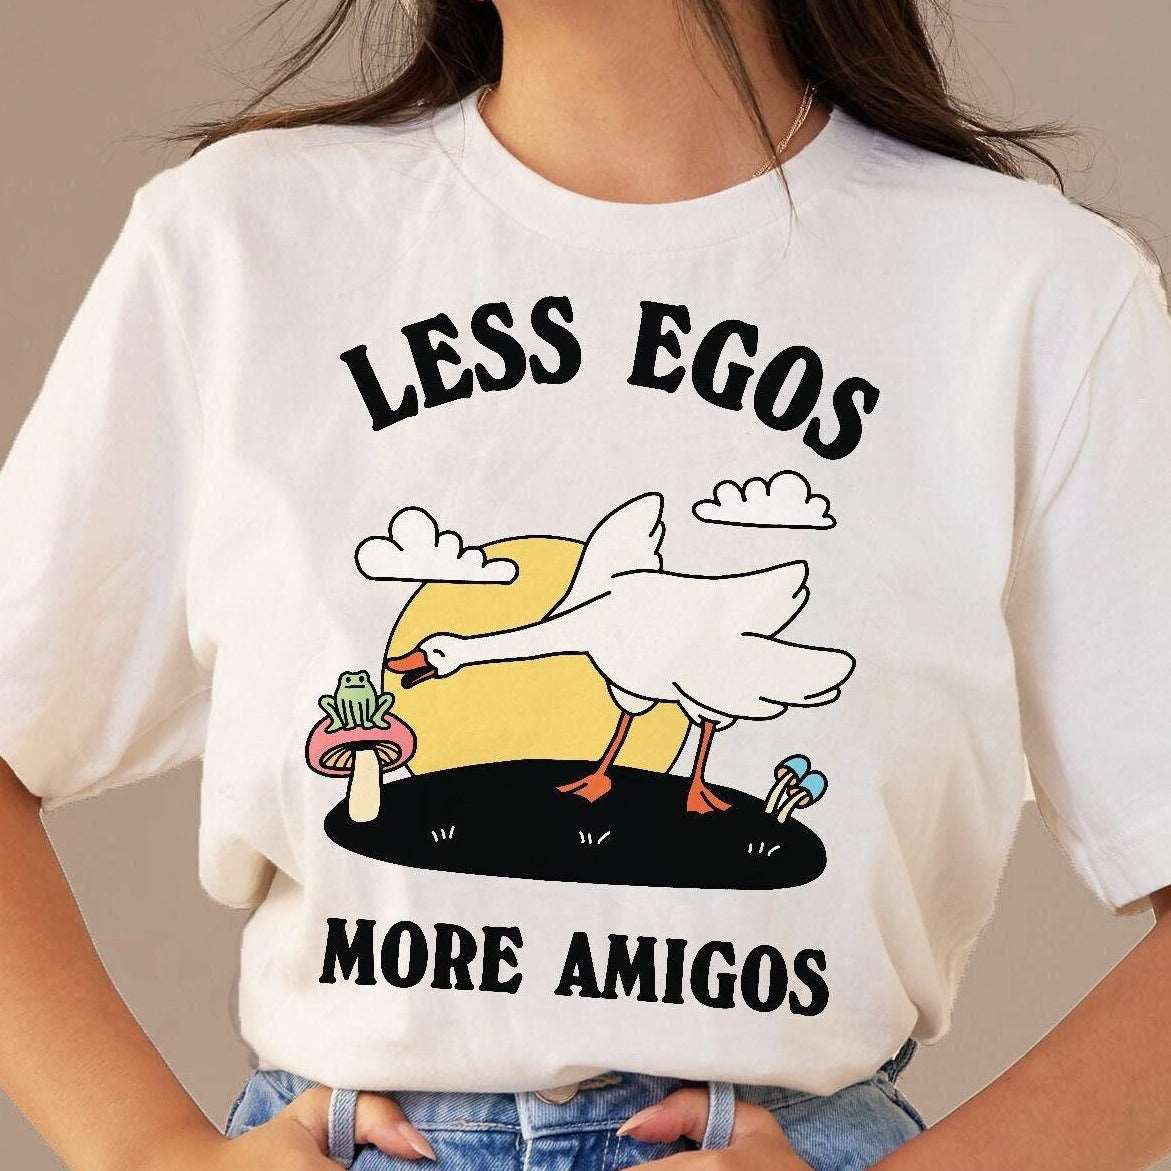 'More Egos Less Amigos' Frog And Goose Tshirt - T-shirts - Kinder Planet Company